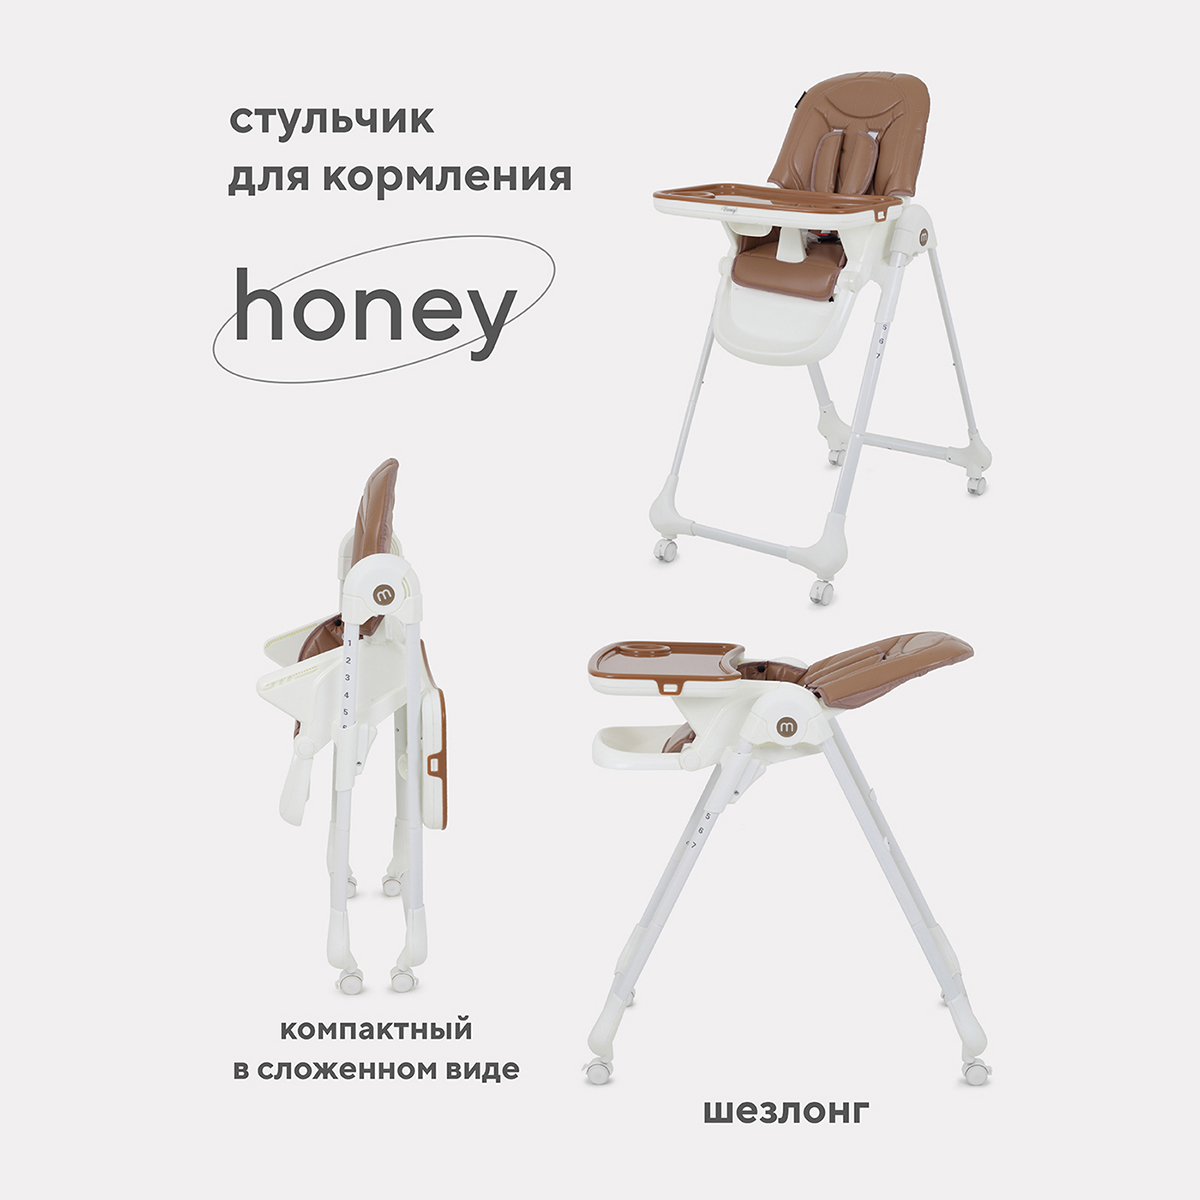 Стульчик для кормления MOWBaby HONEY от 6 месяцев RH600 beige стульчик для кормления mowbaby honey beige